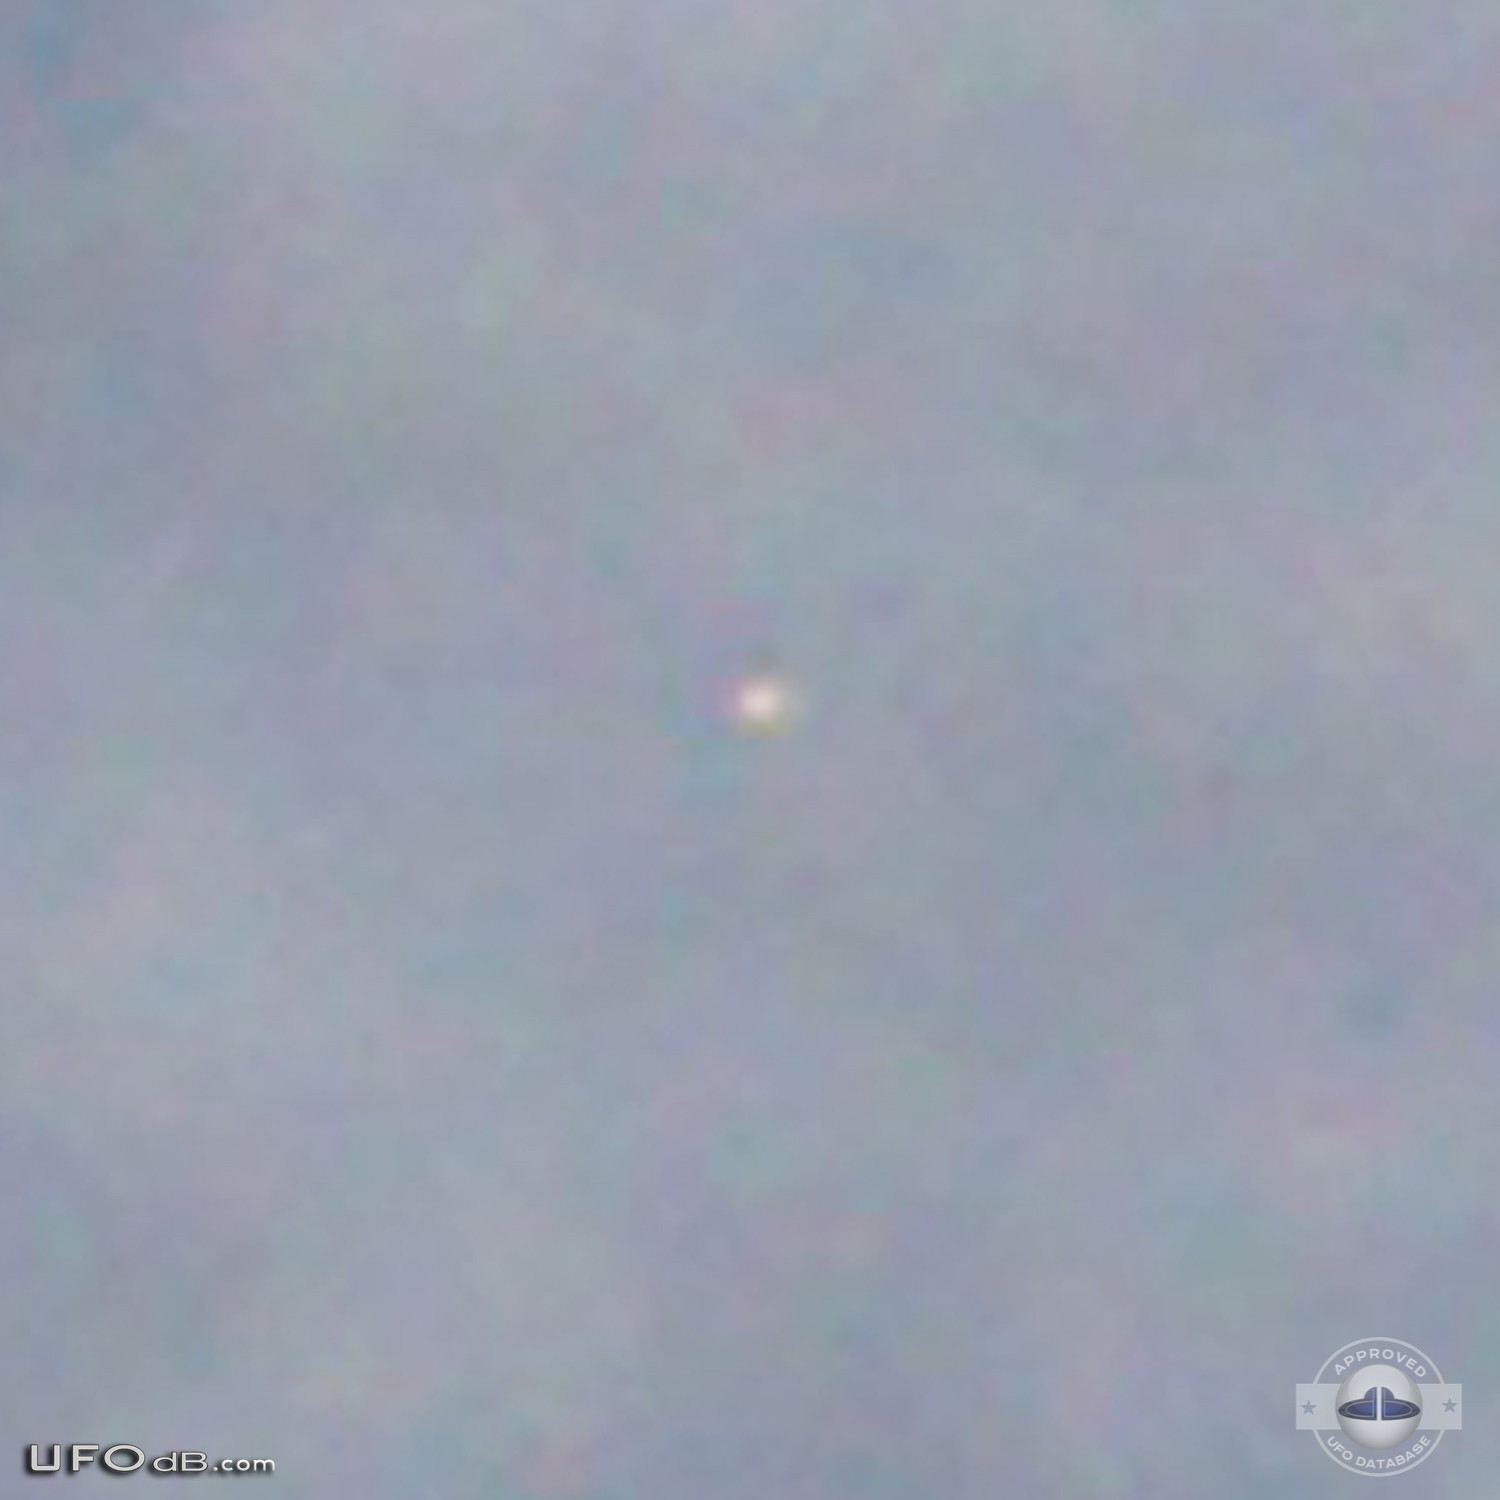 Bird photo captures two UFOs passing near Noosa Heads, Australia 2012 UFO Picture #411-6